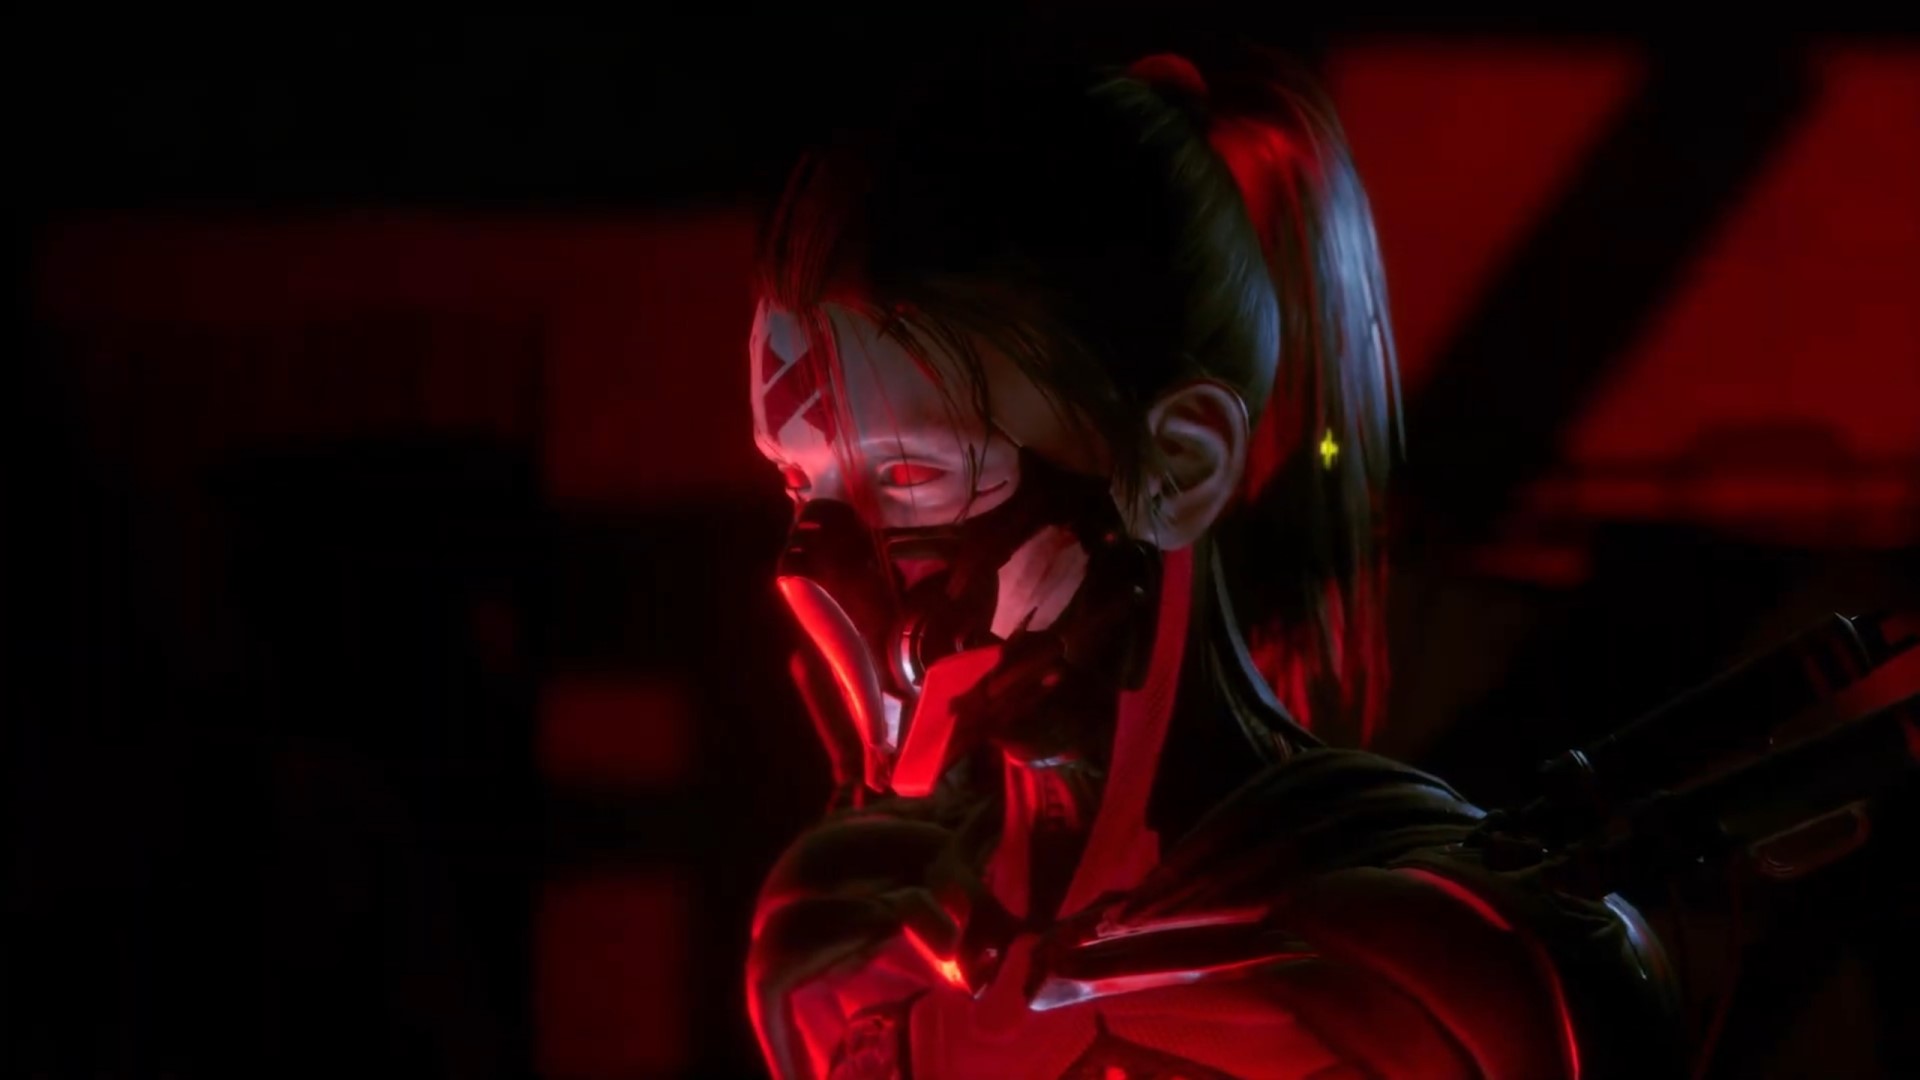 Cyberpunk ninja game Ghostrunner sequel is coming in 2023